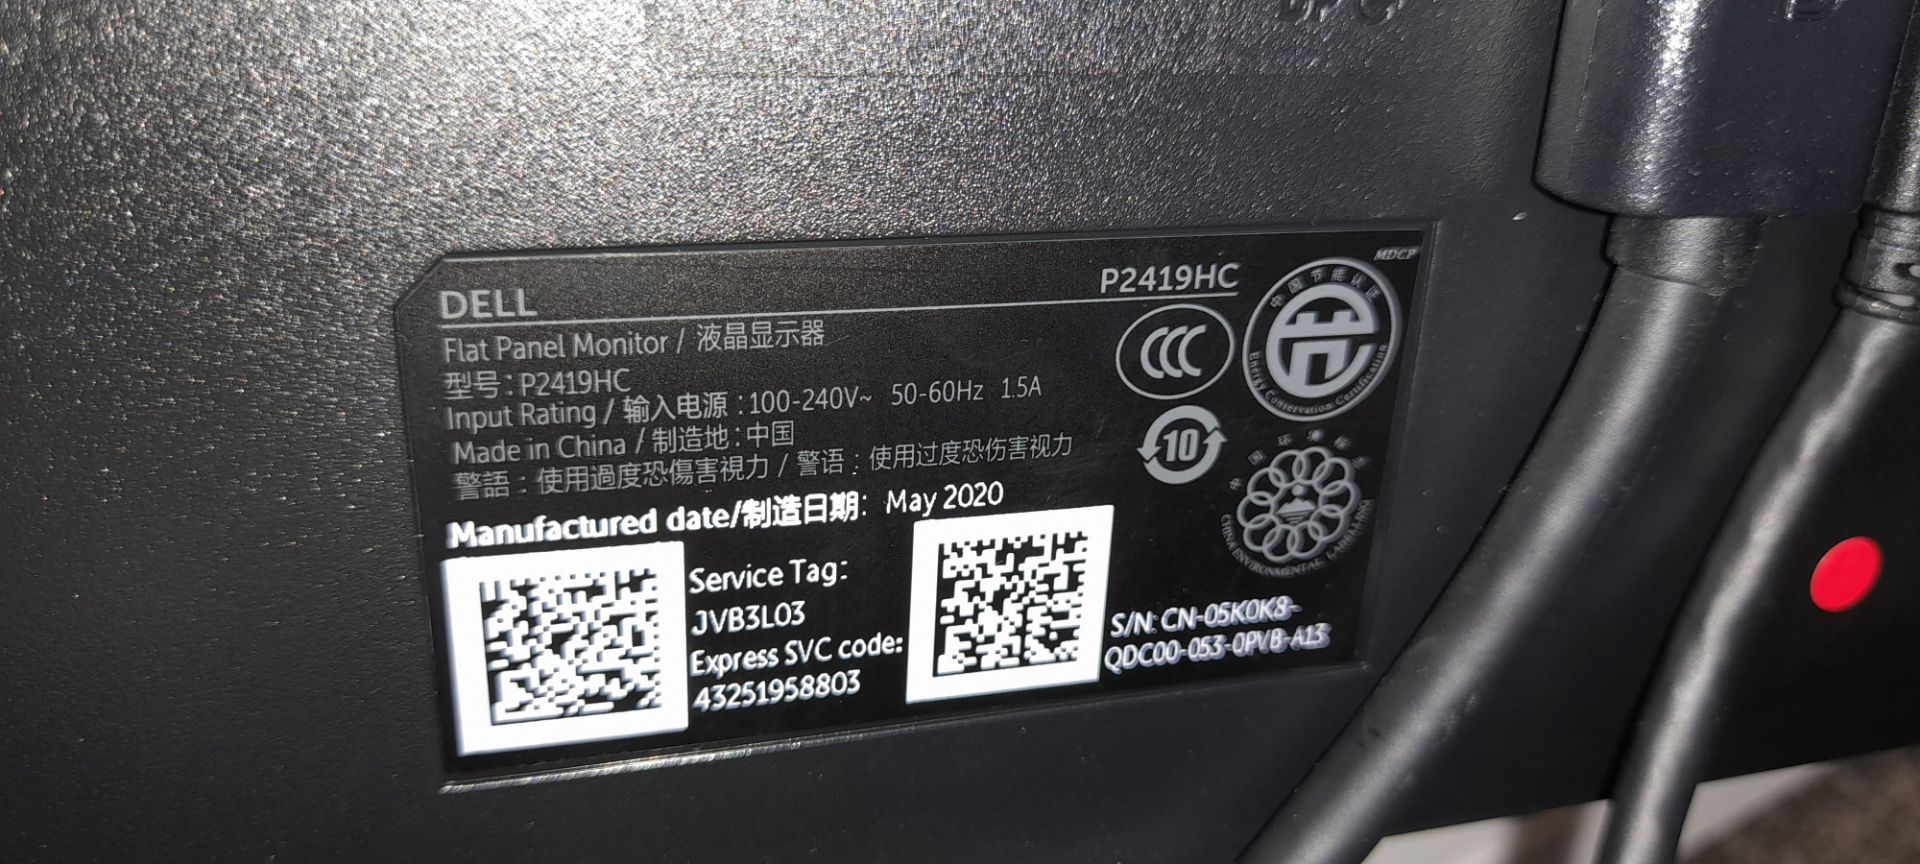 Dell 24” flat panel monitor, P2419HC, S/N: CN-05K0K8-QDC00-053-OPVB-A13 - Image 3 of 3